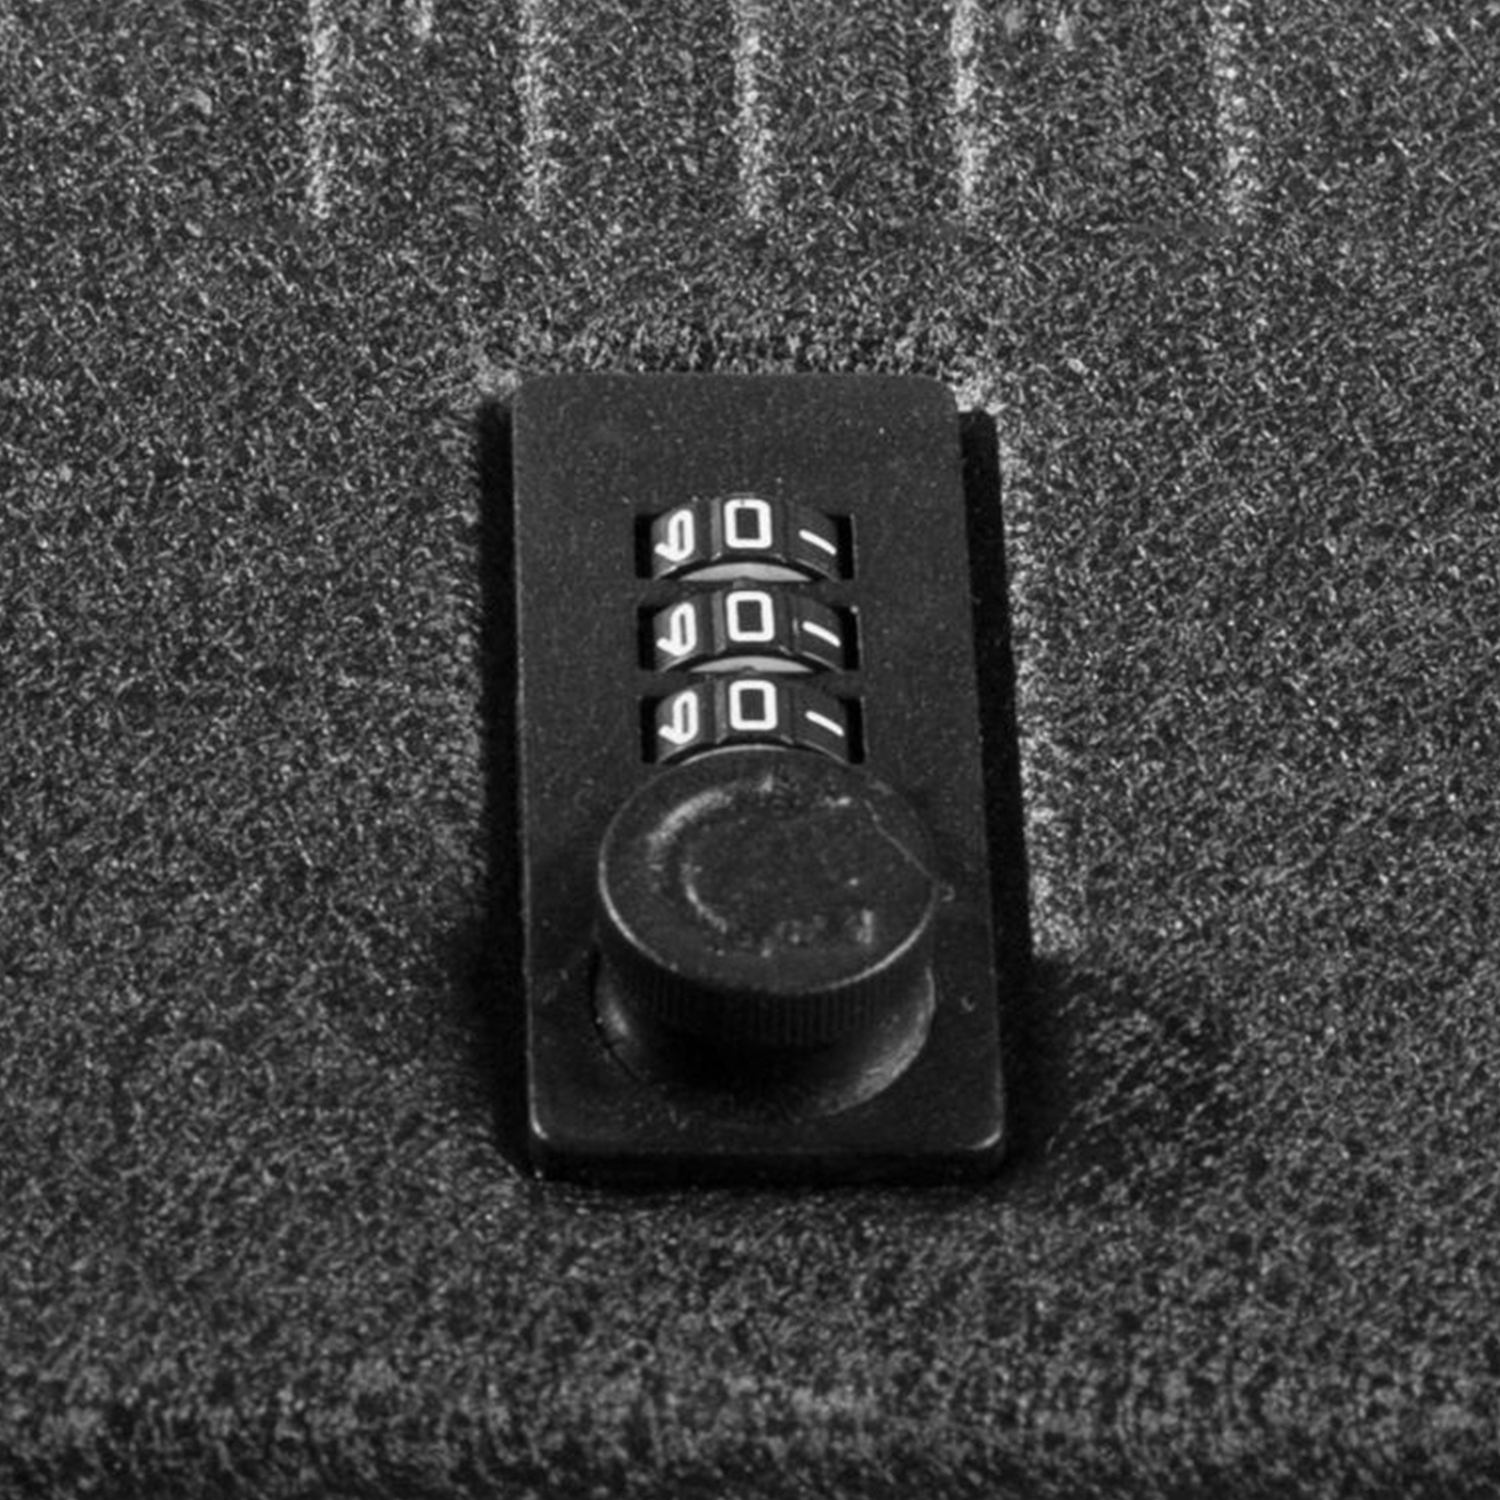 GunVault NanoVault 300 TSA Approved Compact Portable Travel Lock Gun Safe - image 5 of 5